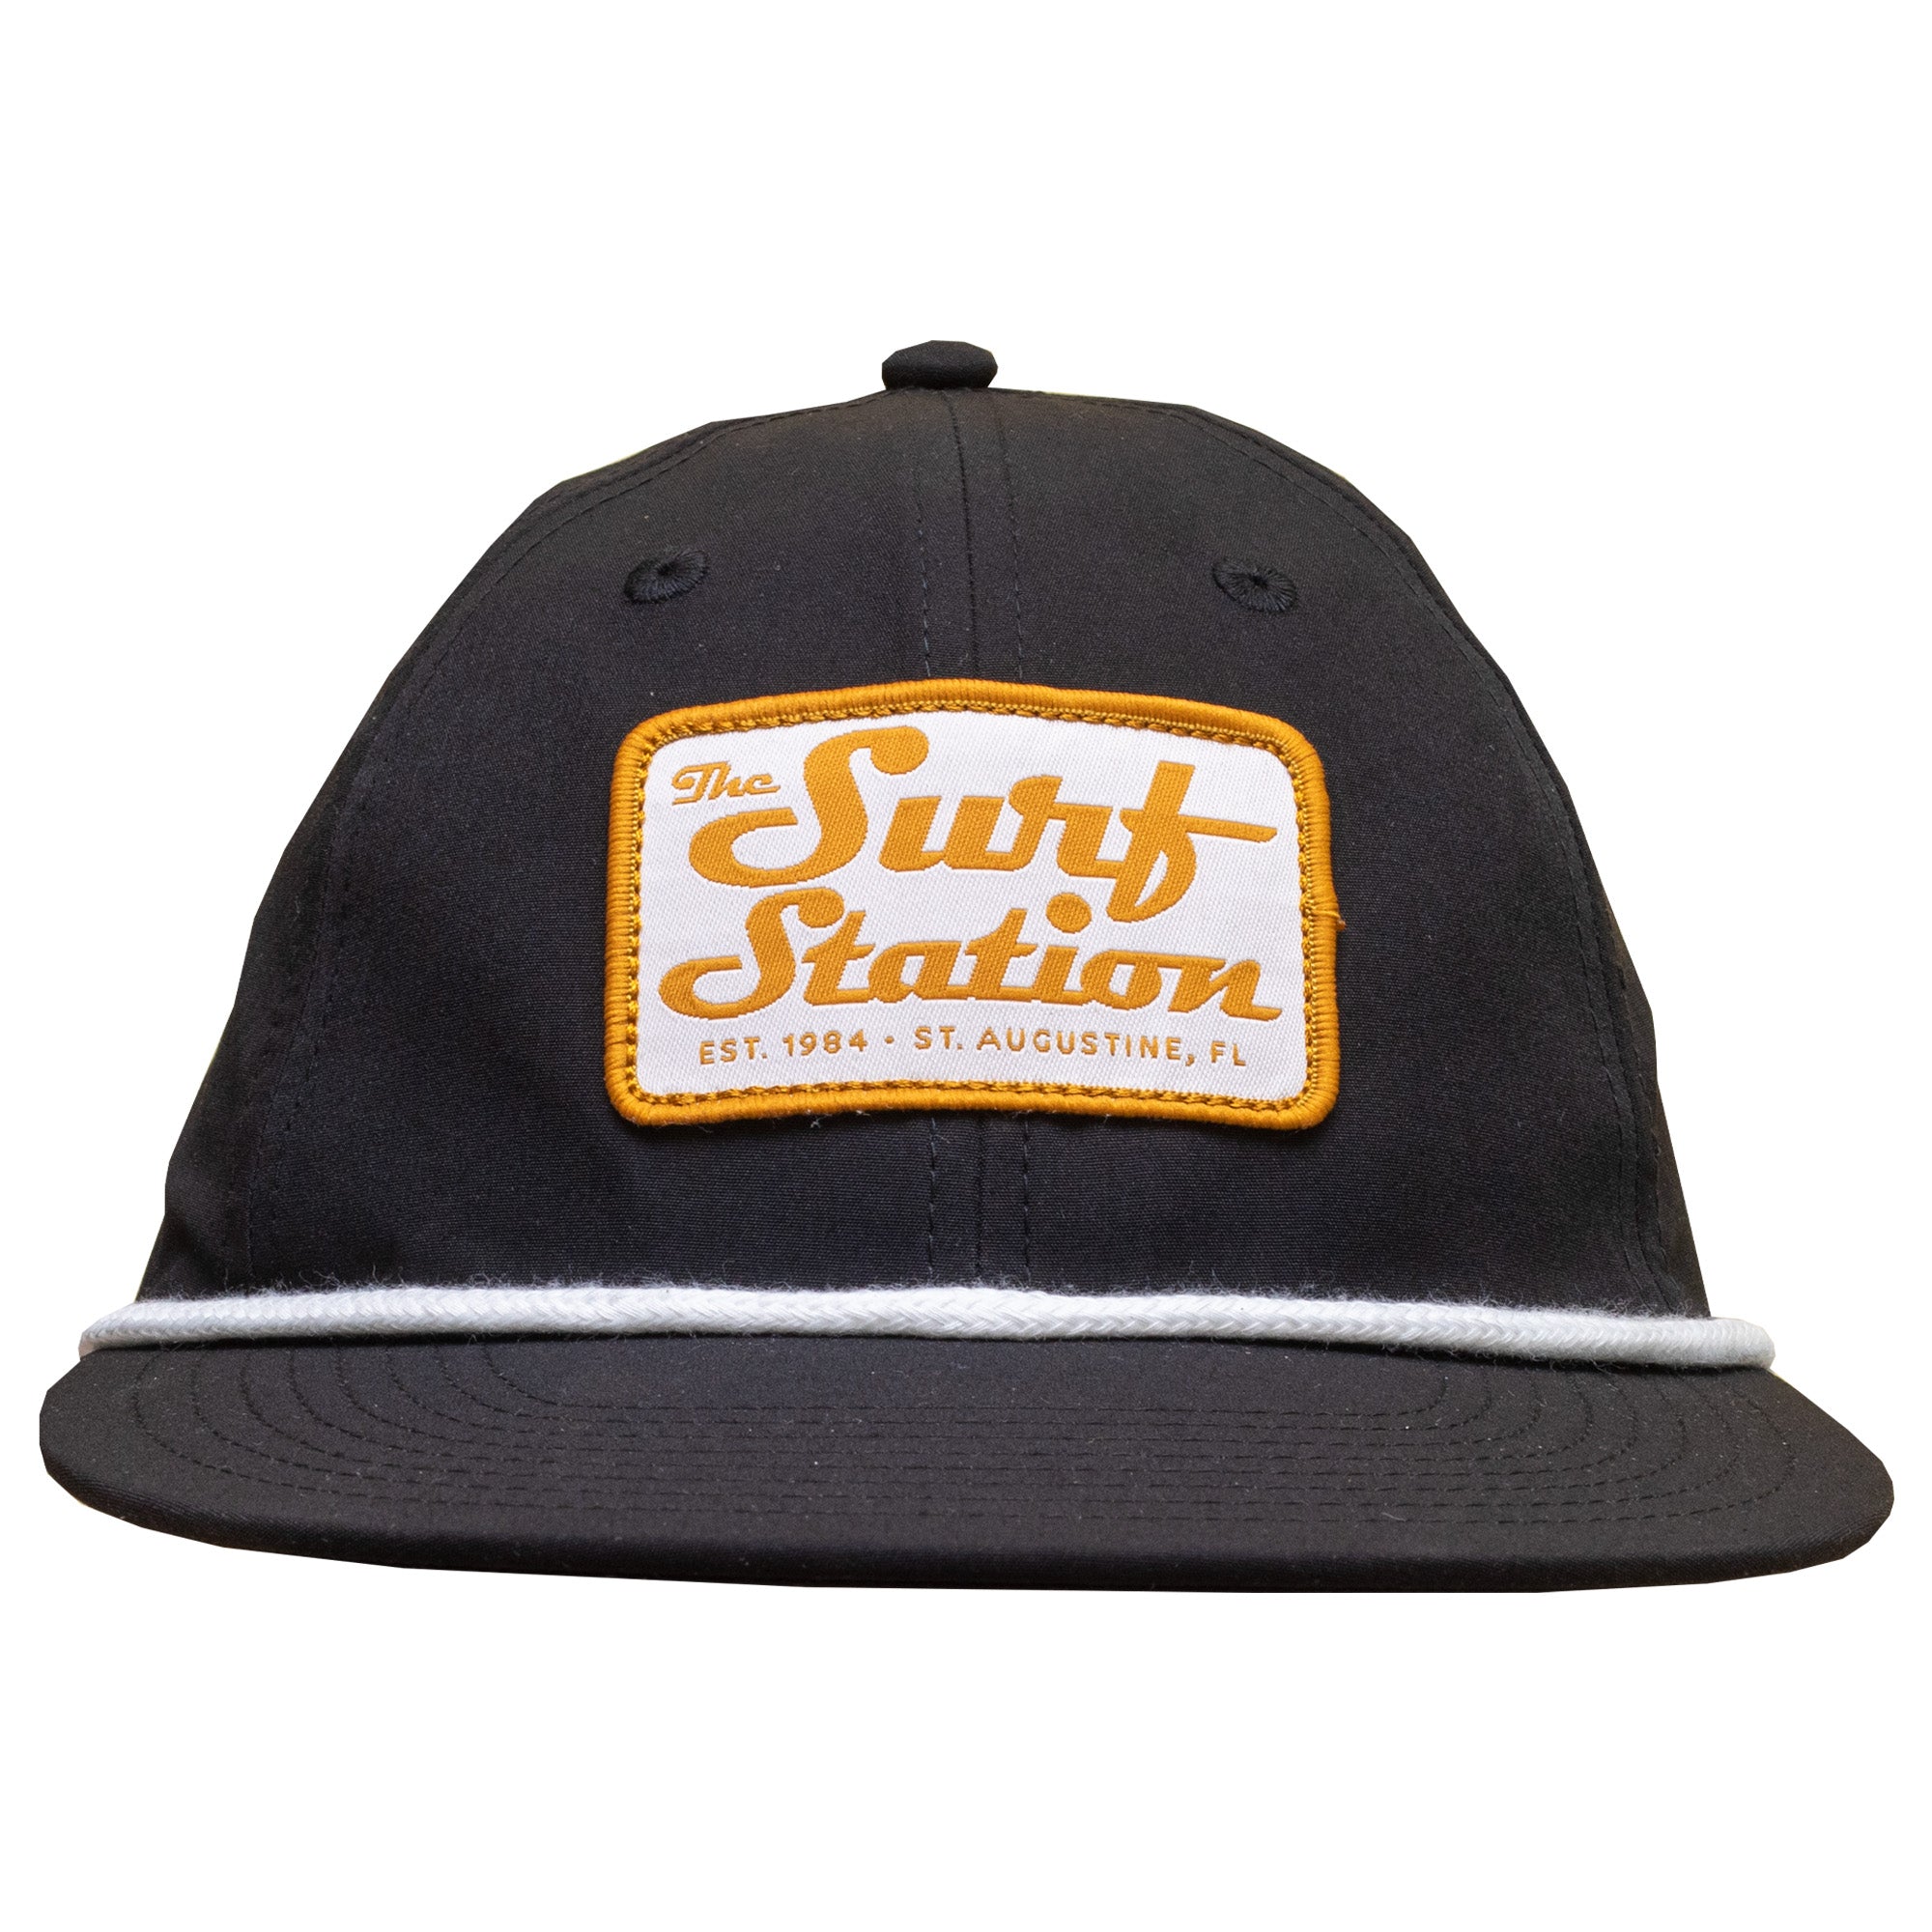 Surf Station Mechanic Logo Men's Hat